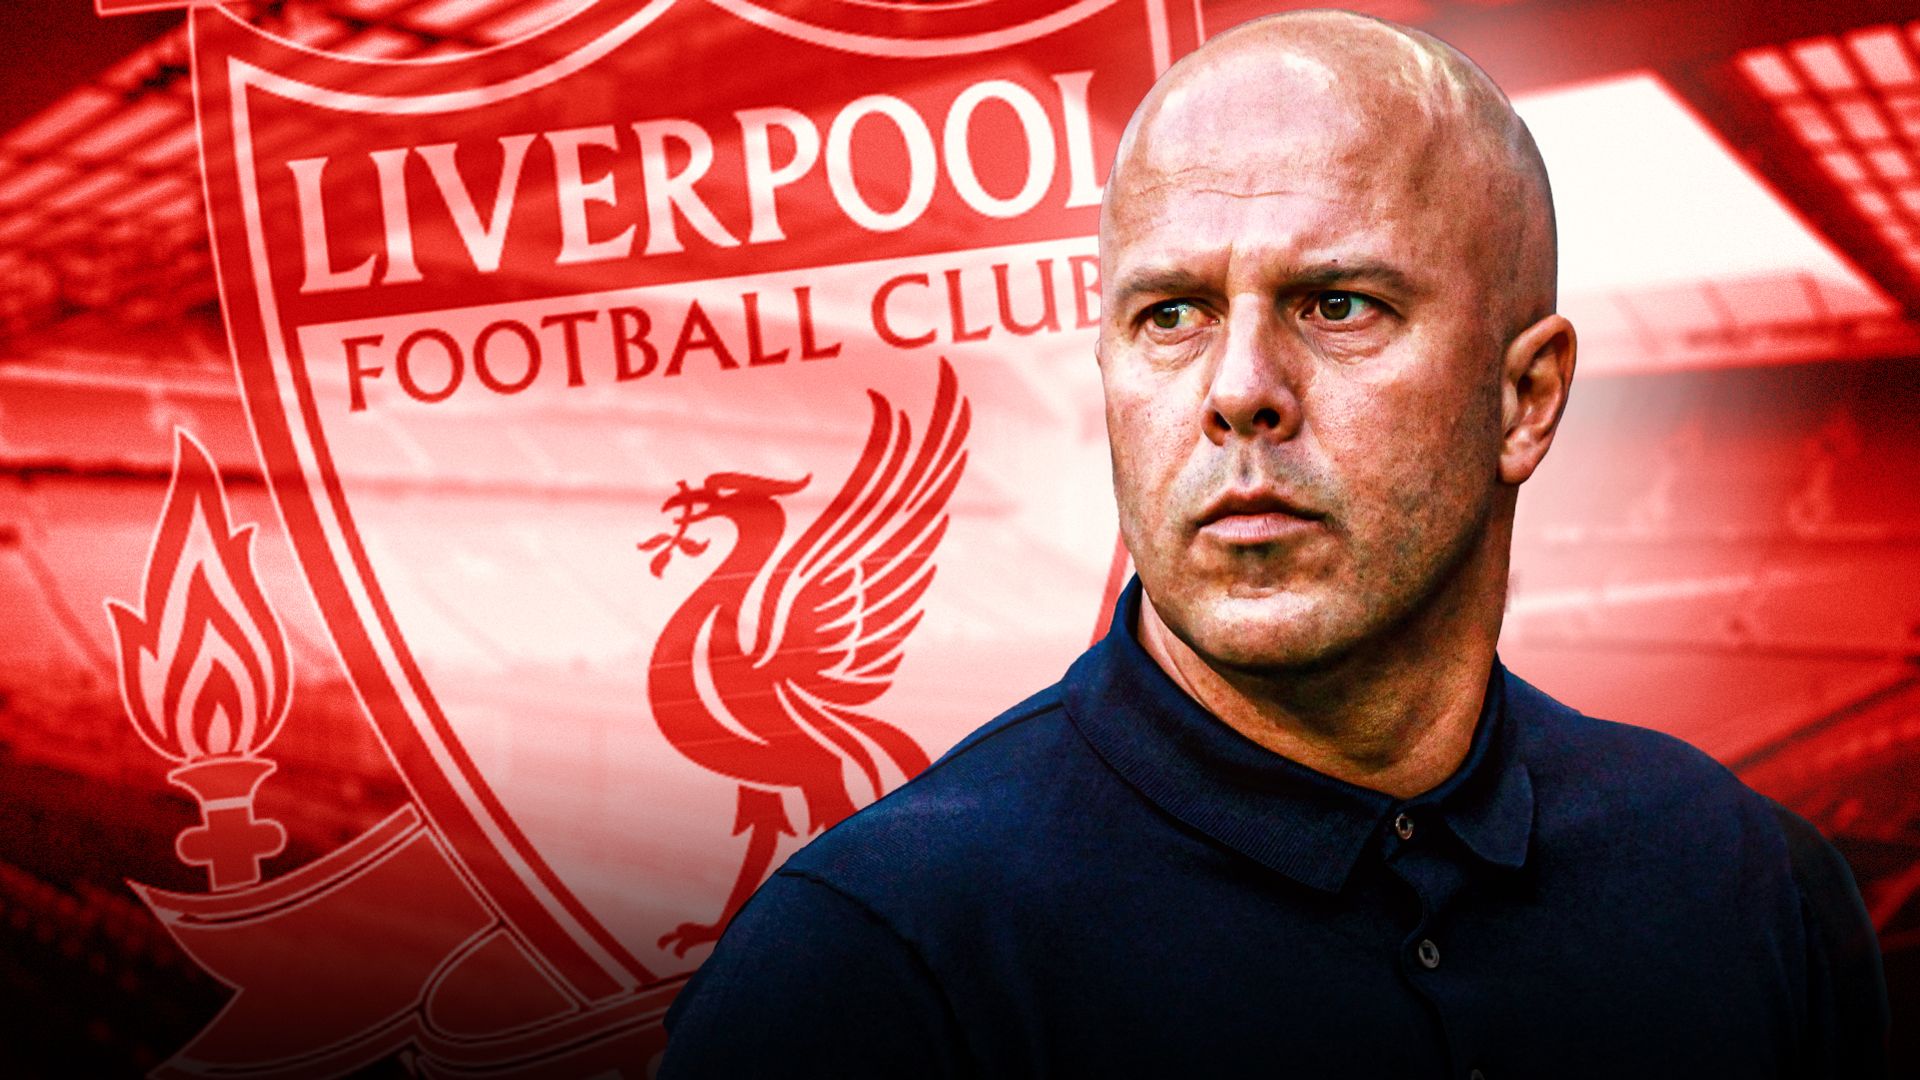 Liverpool confirm Slot as Klopp's successor